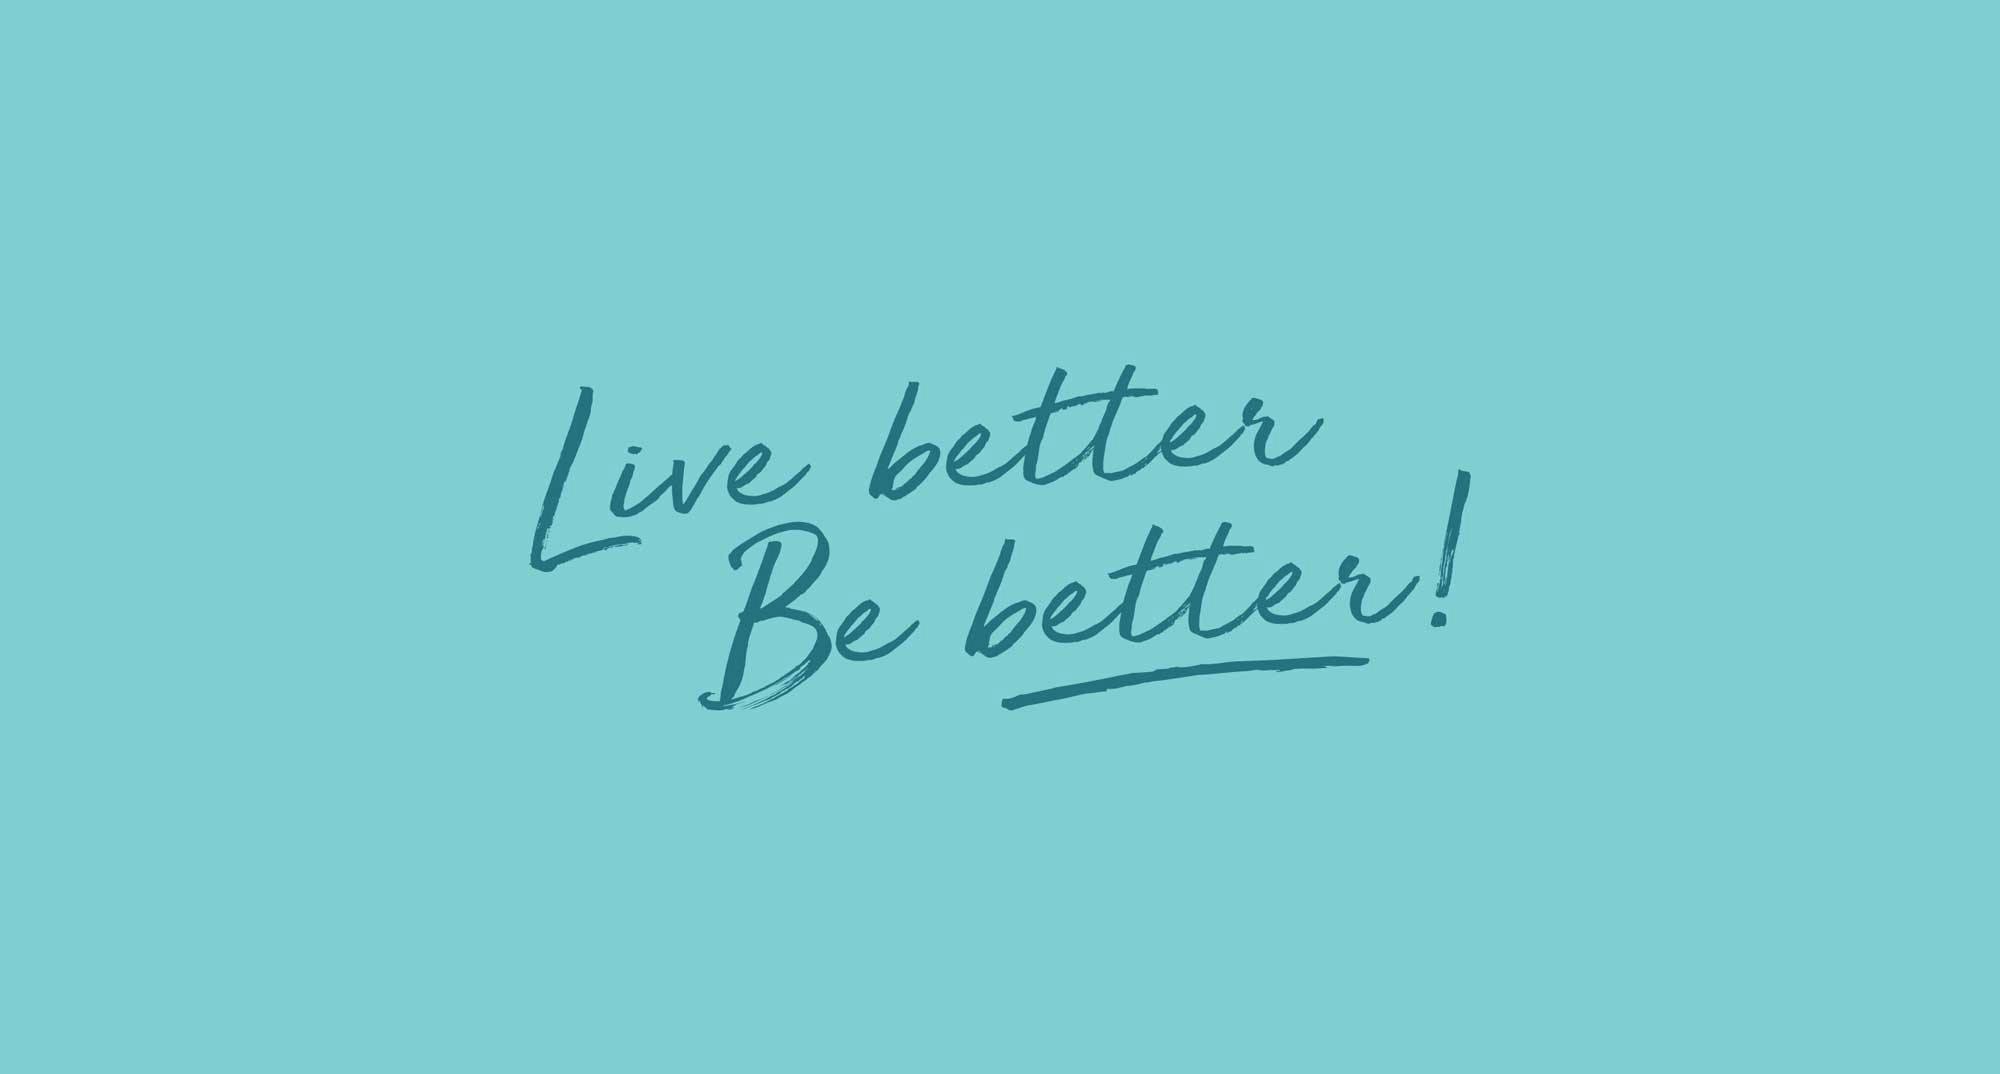 Live better be better tagline